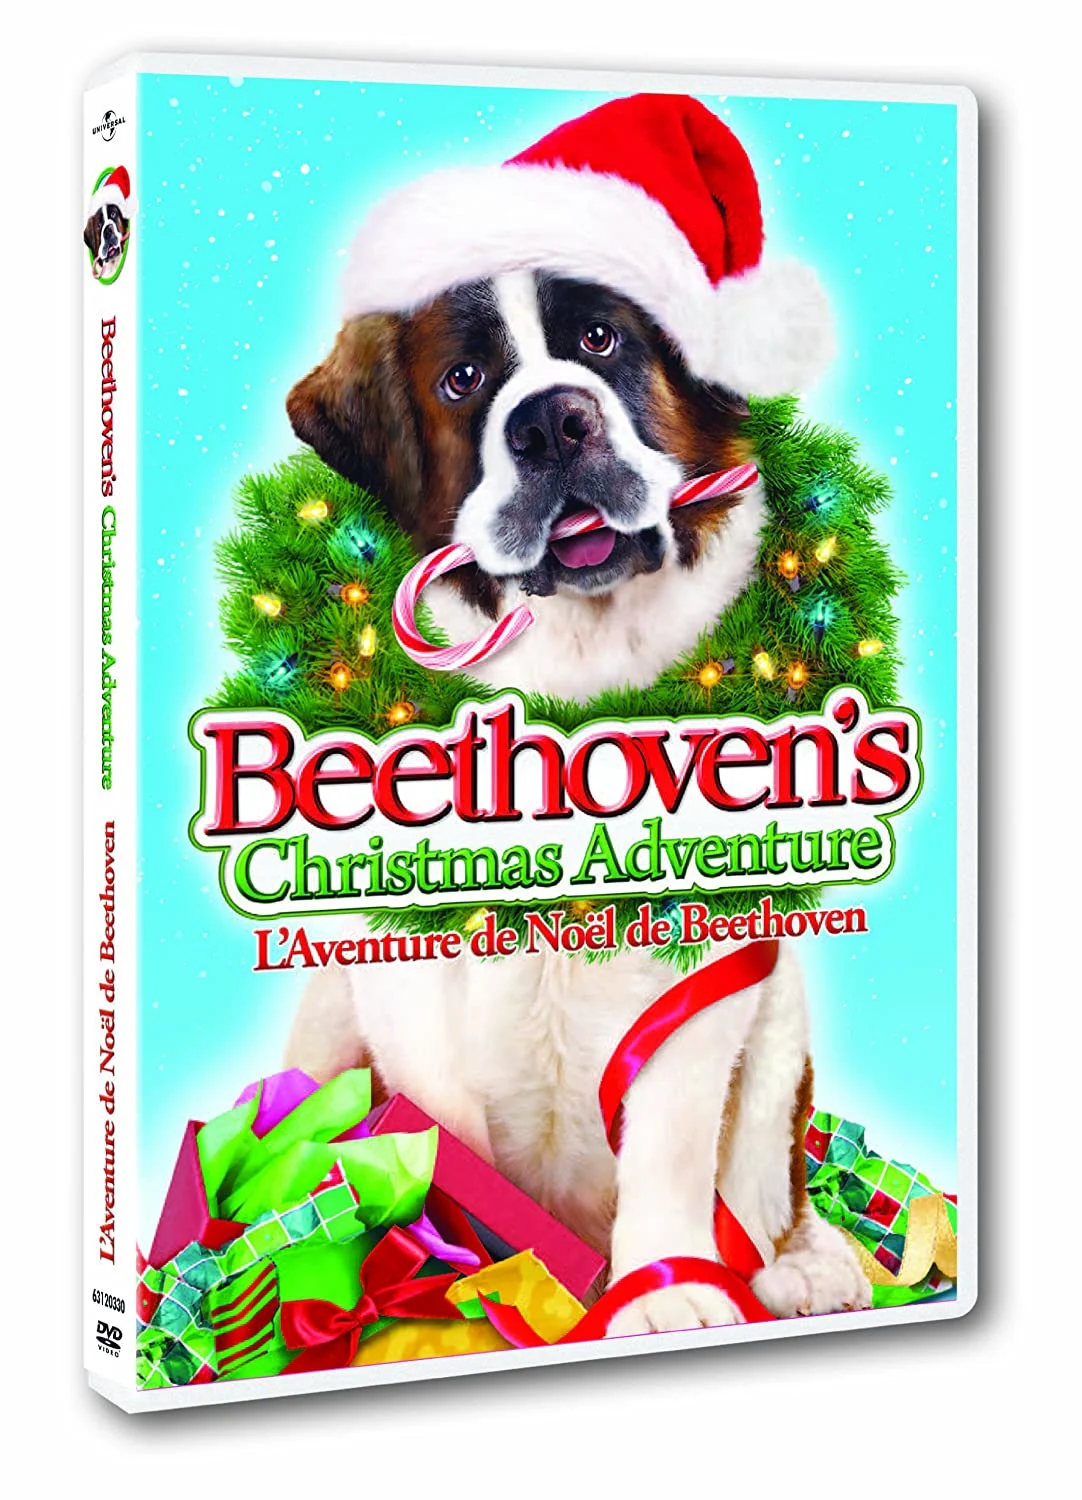 Beethoven’s Christmas Adventure CDN (DVD) on MovieShack